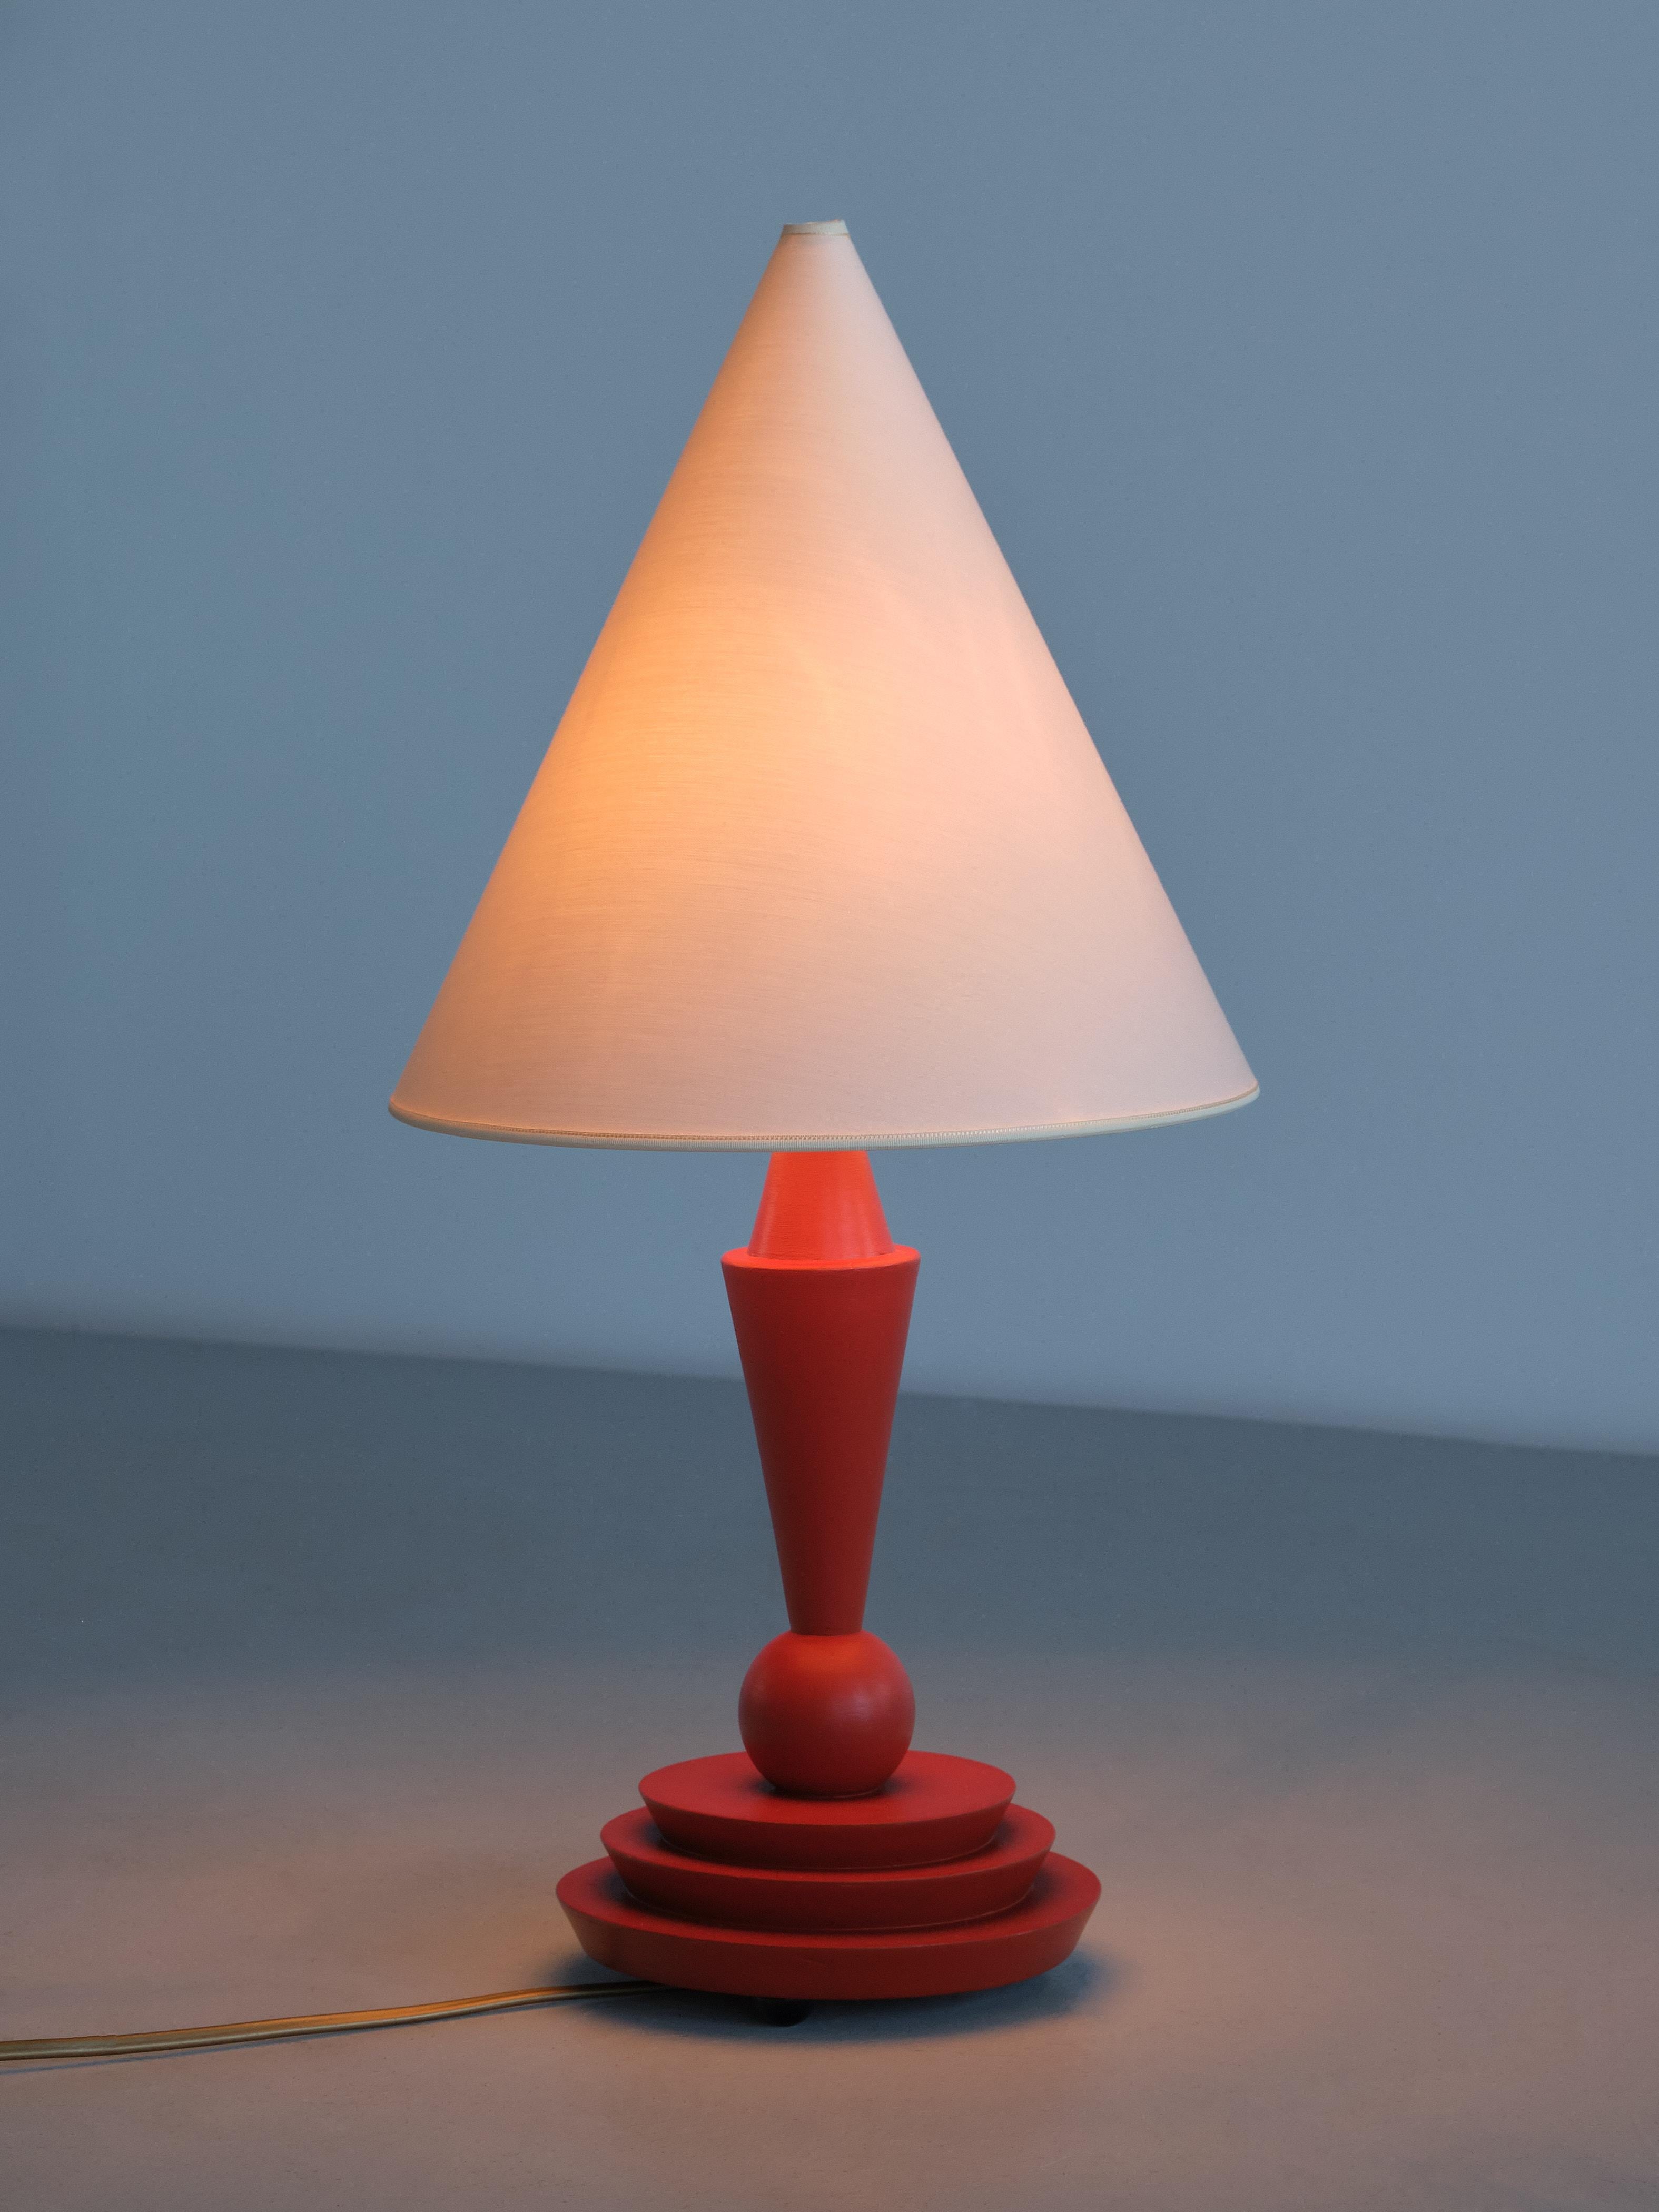 Art Deco Table Lamp in Vermilion Orange Lacquered Beech Wood, Austria, 1930s For Sale 1